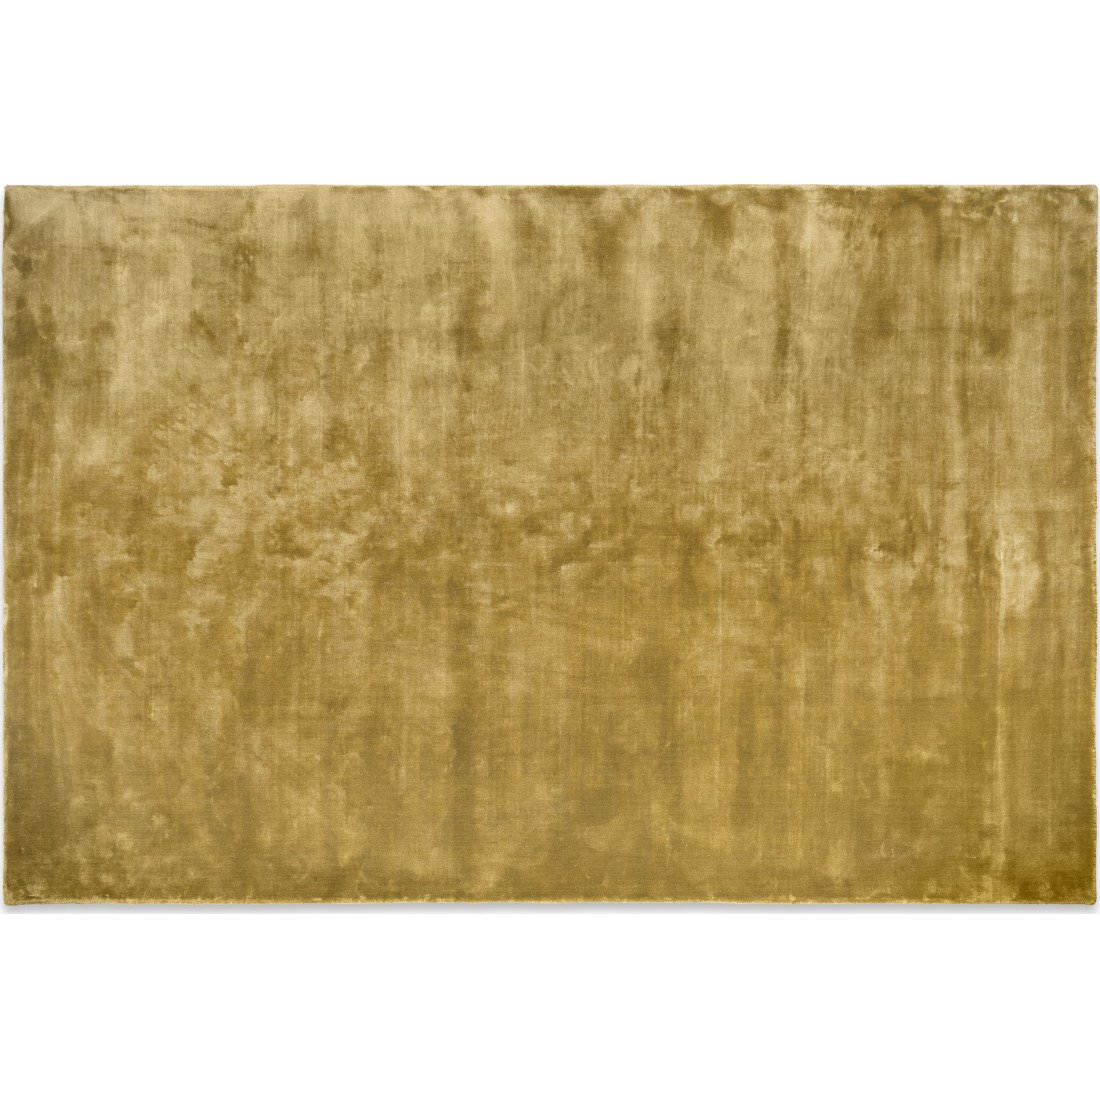 Merkoya Luxury Viscose Rug, Large 160 x 230 cm, Antique Gold